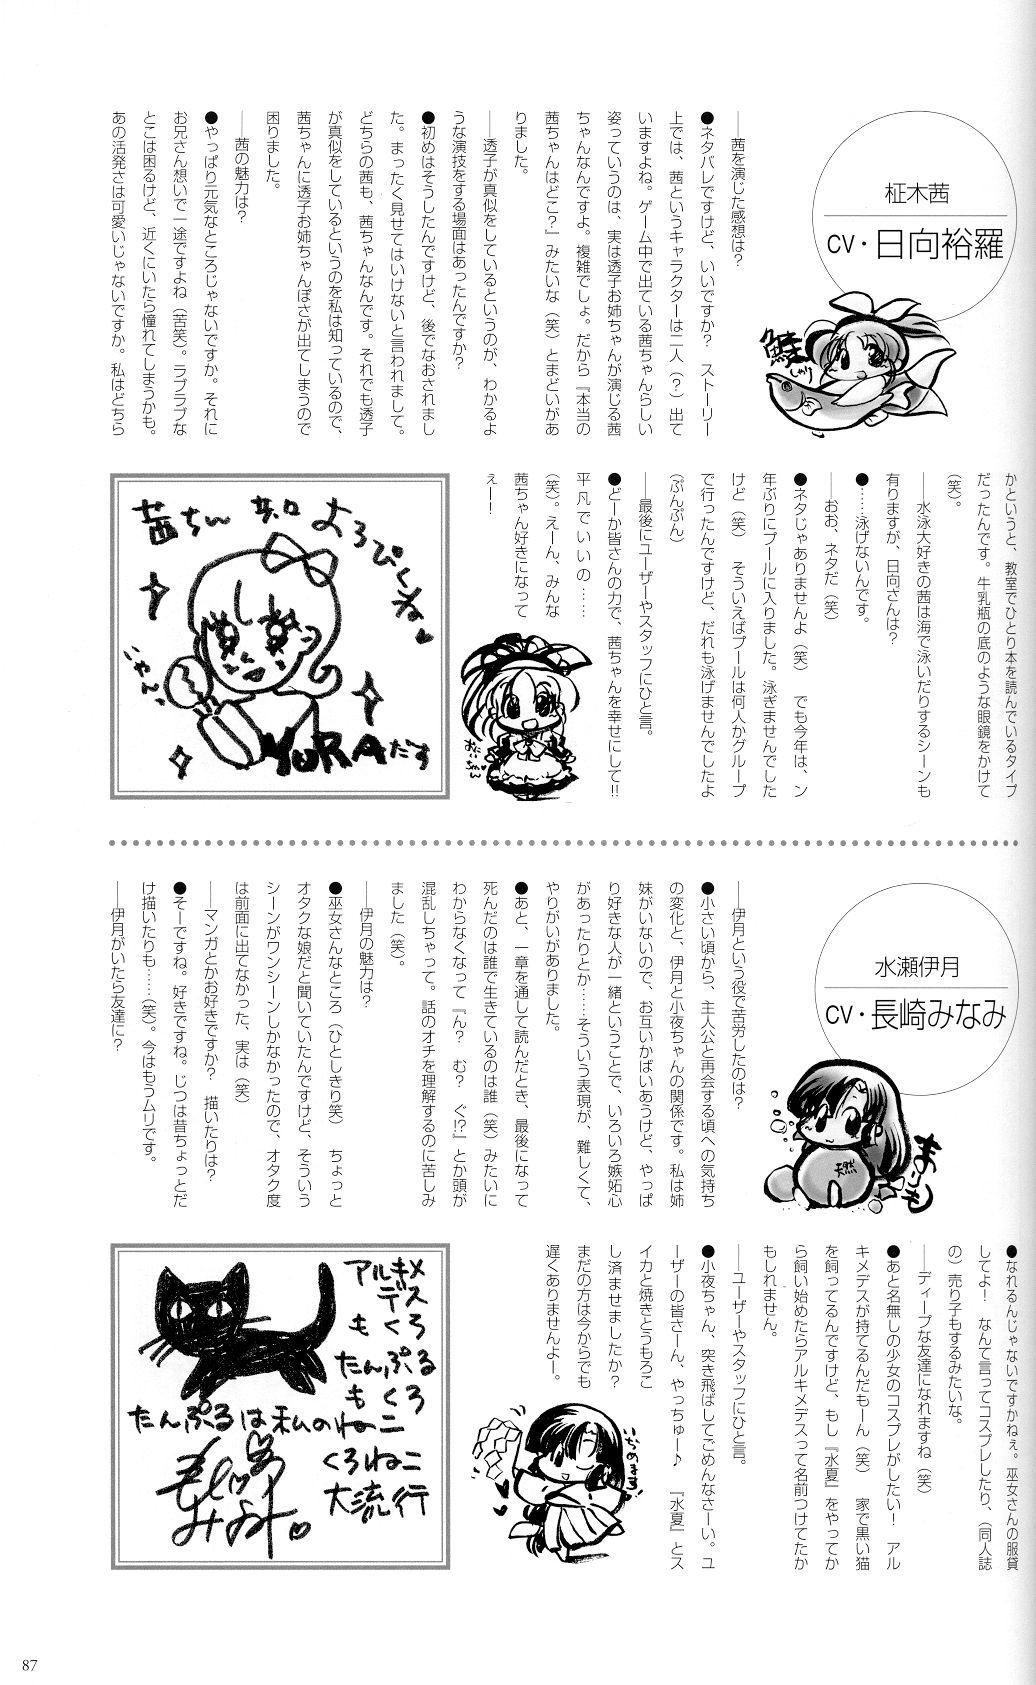 SUIKA Official Visual Fan Book 95